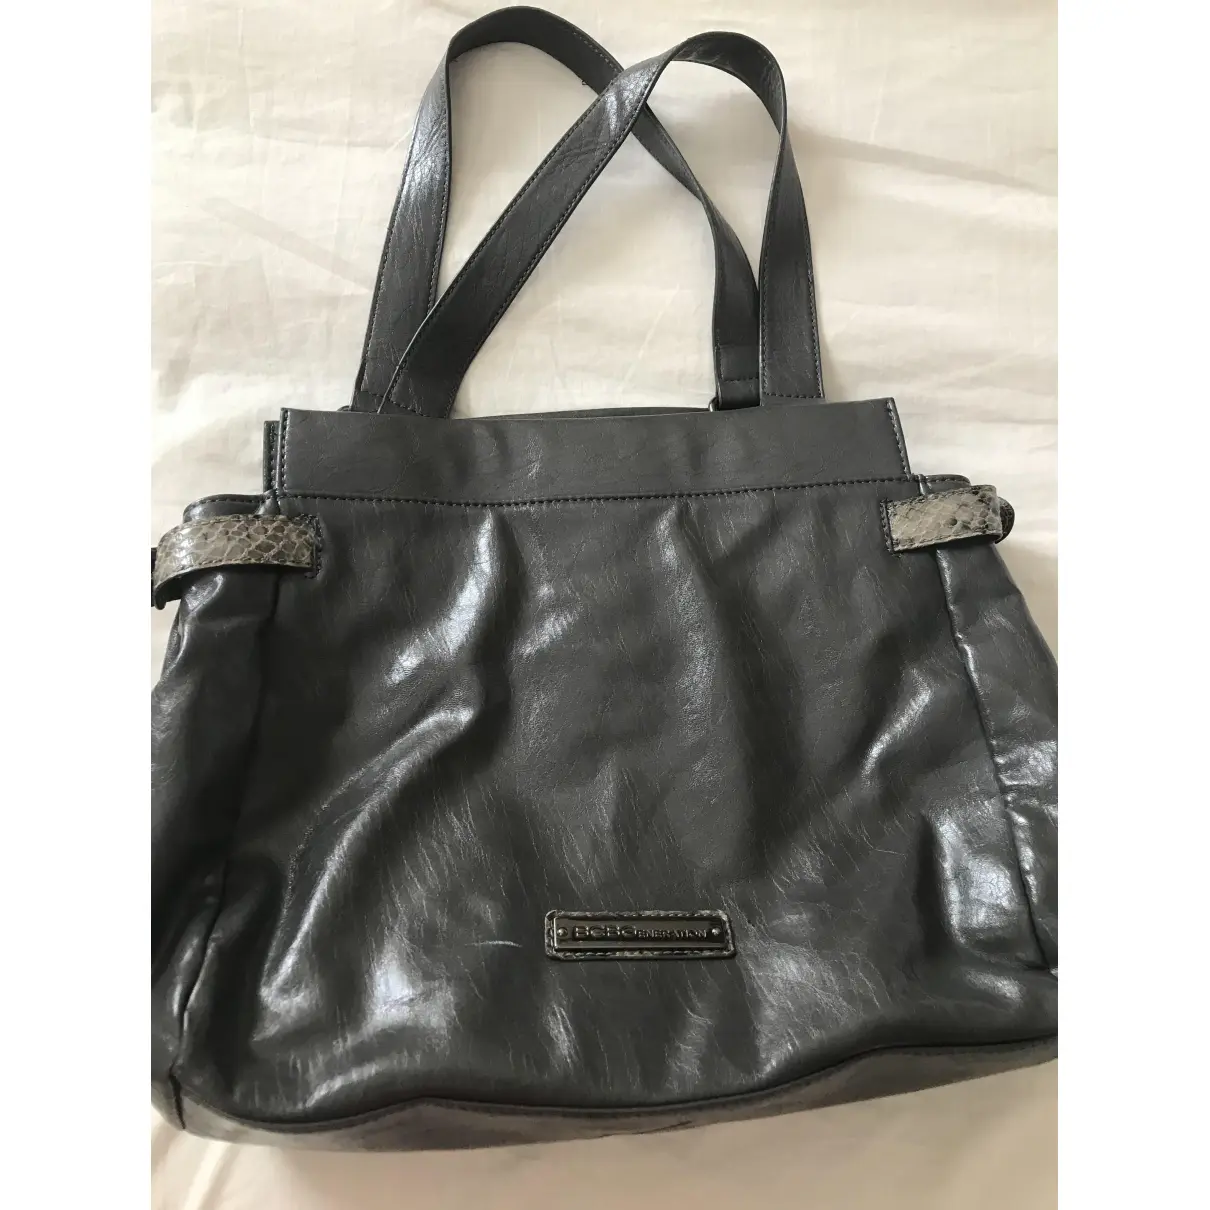 Buy Bcbg Max Azria Leather handbag online